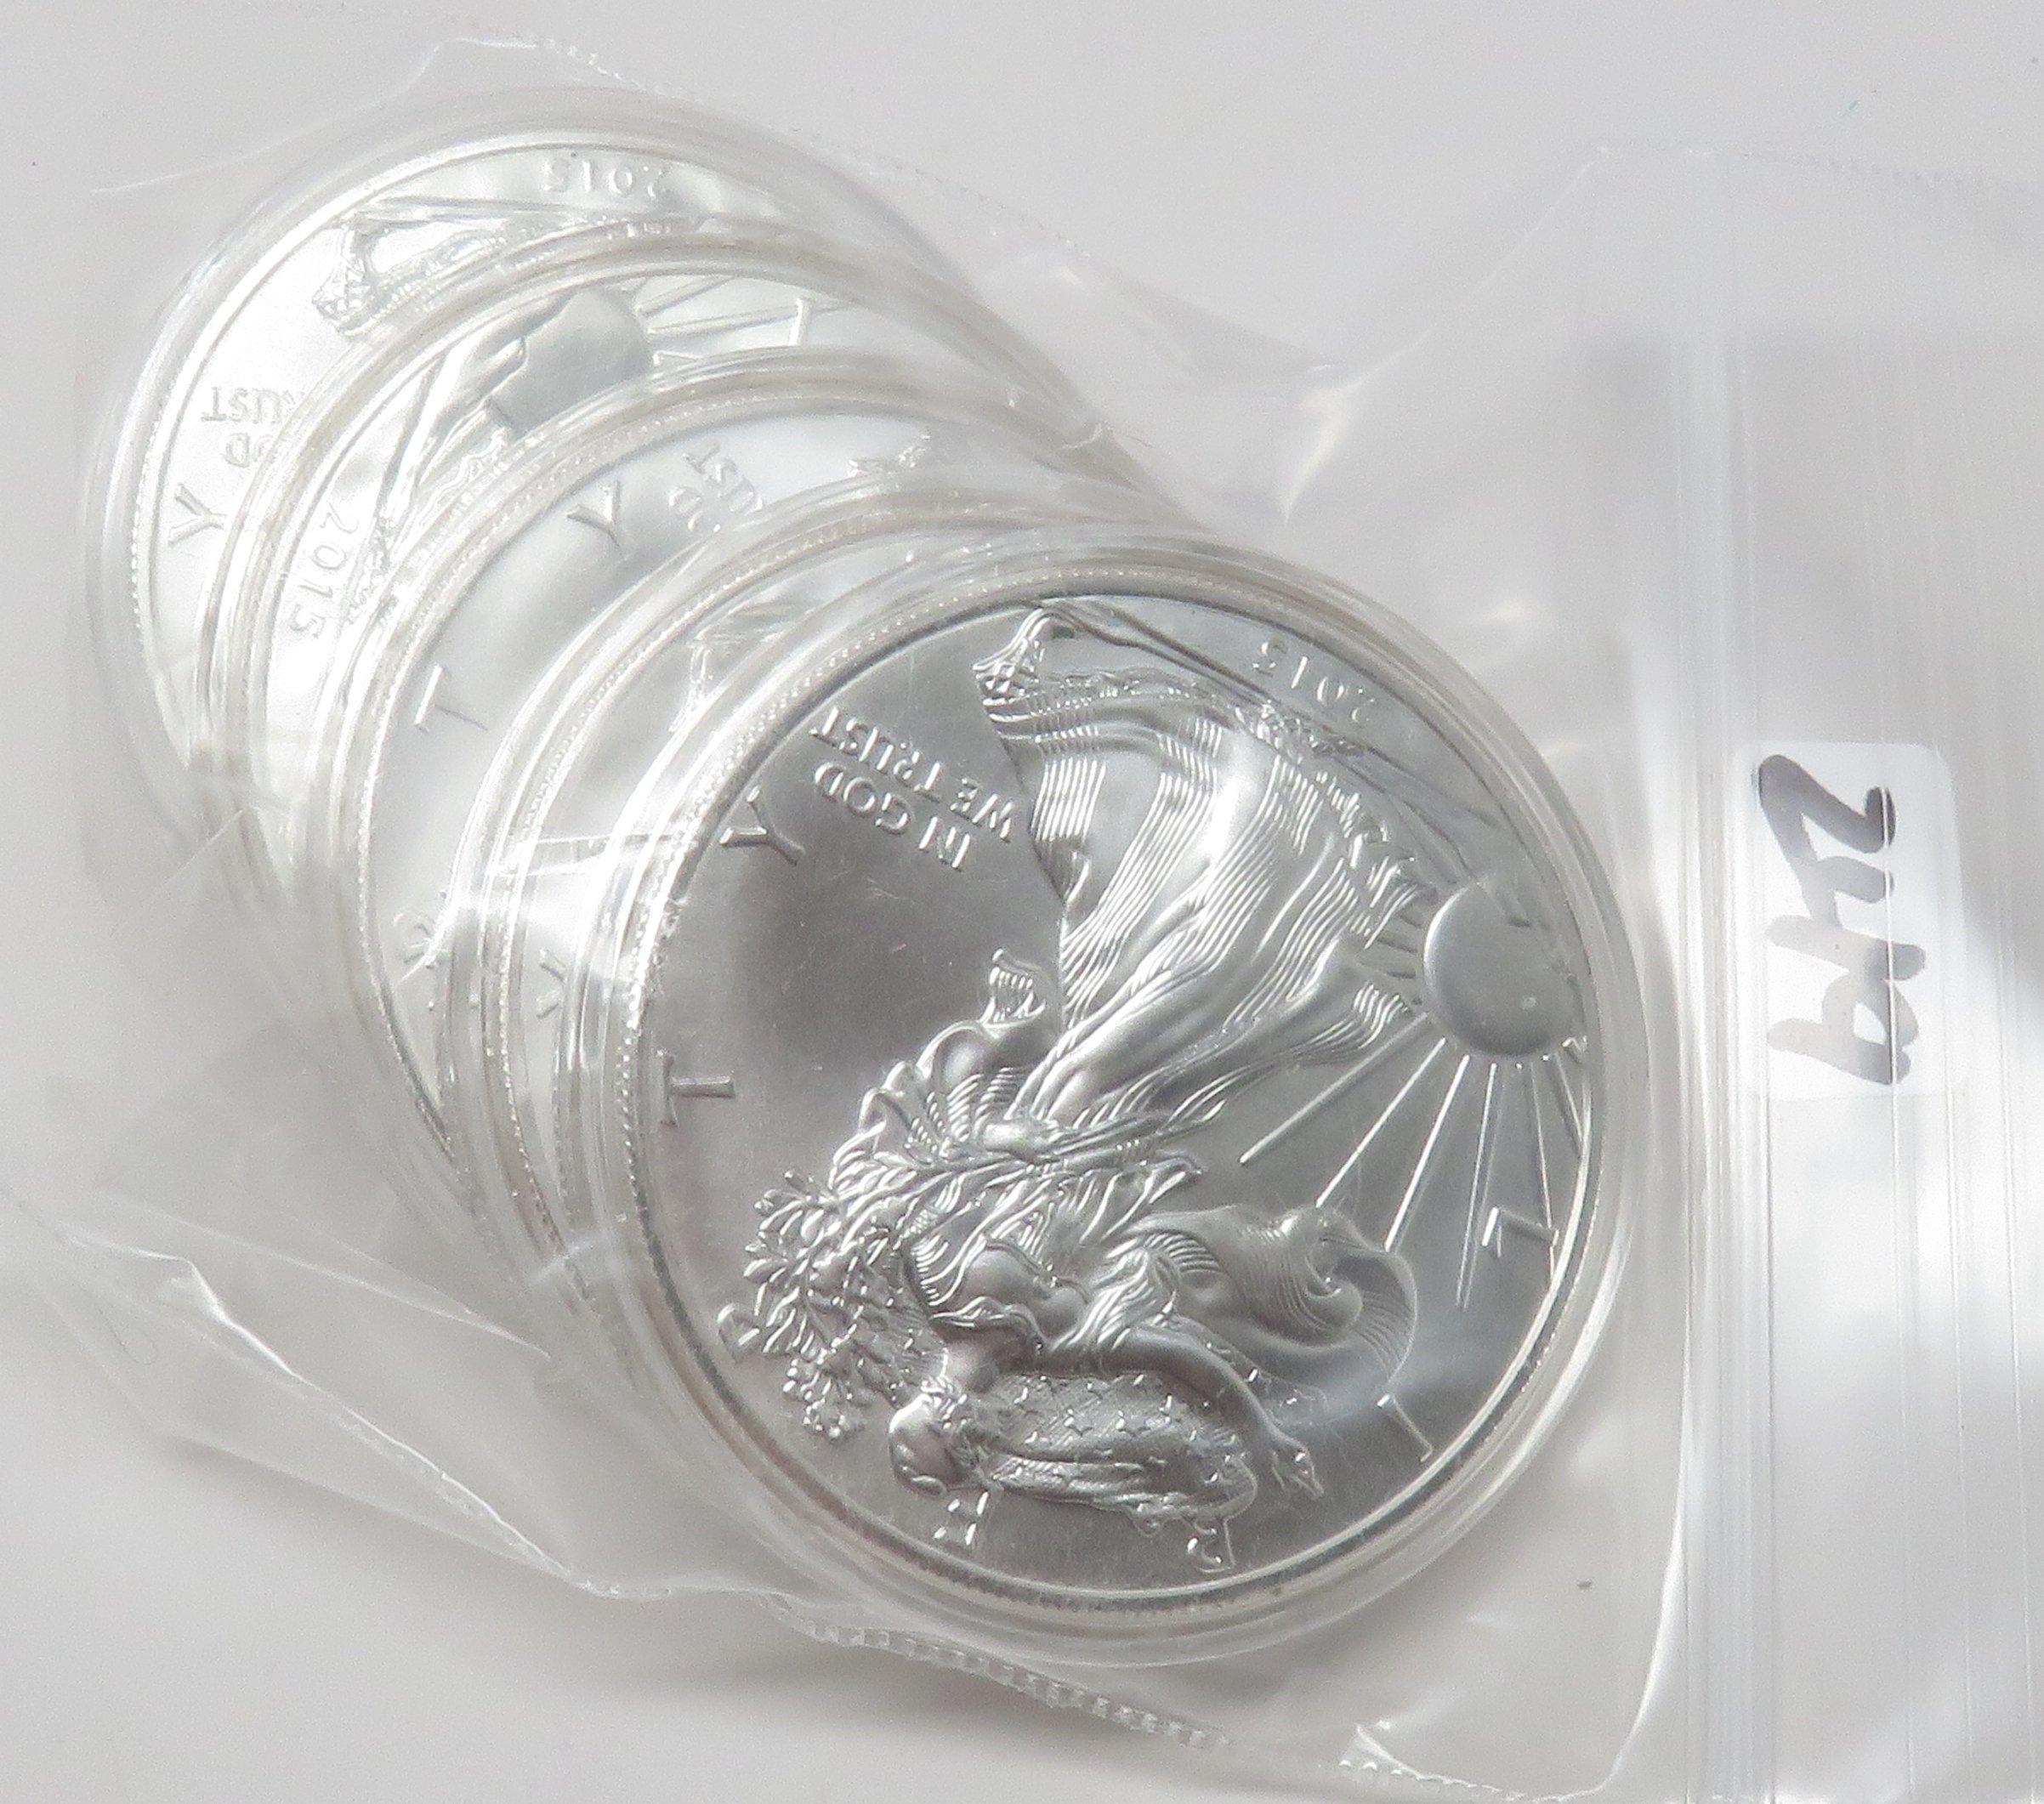 5 American Silver Eagles 2015 BU in capsules